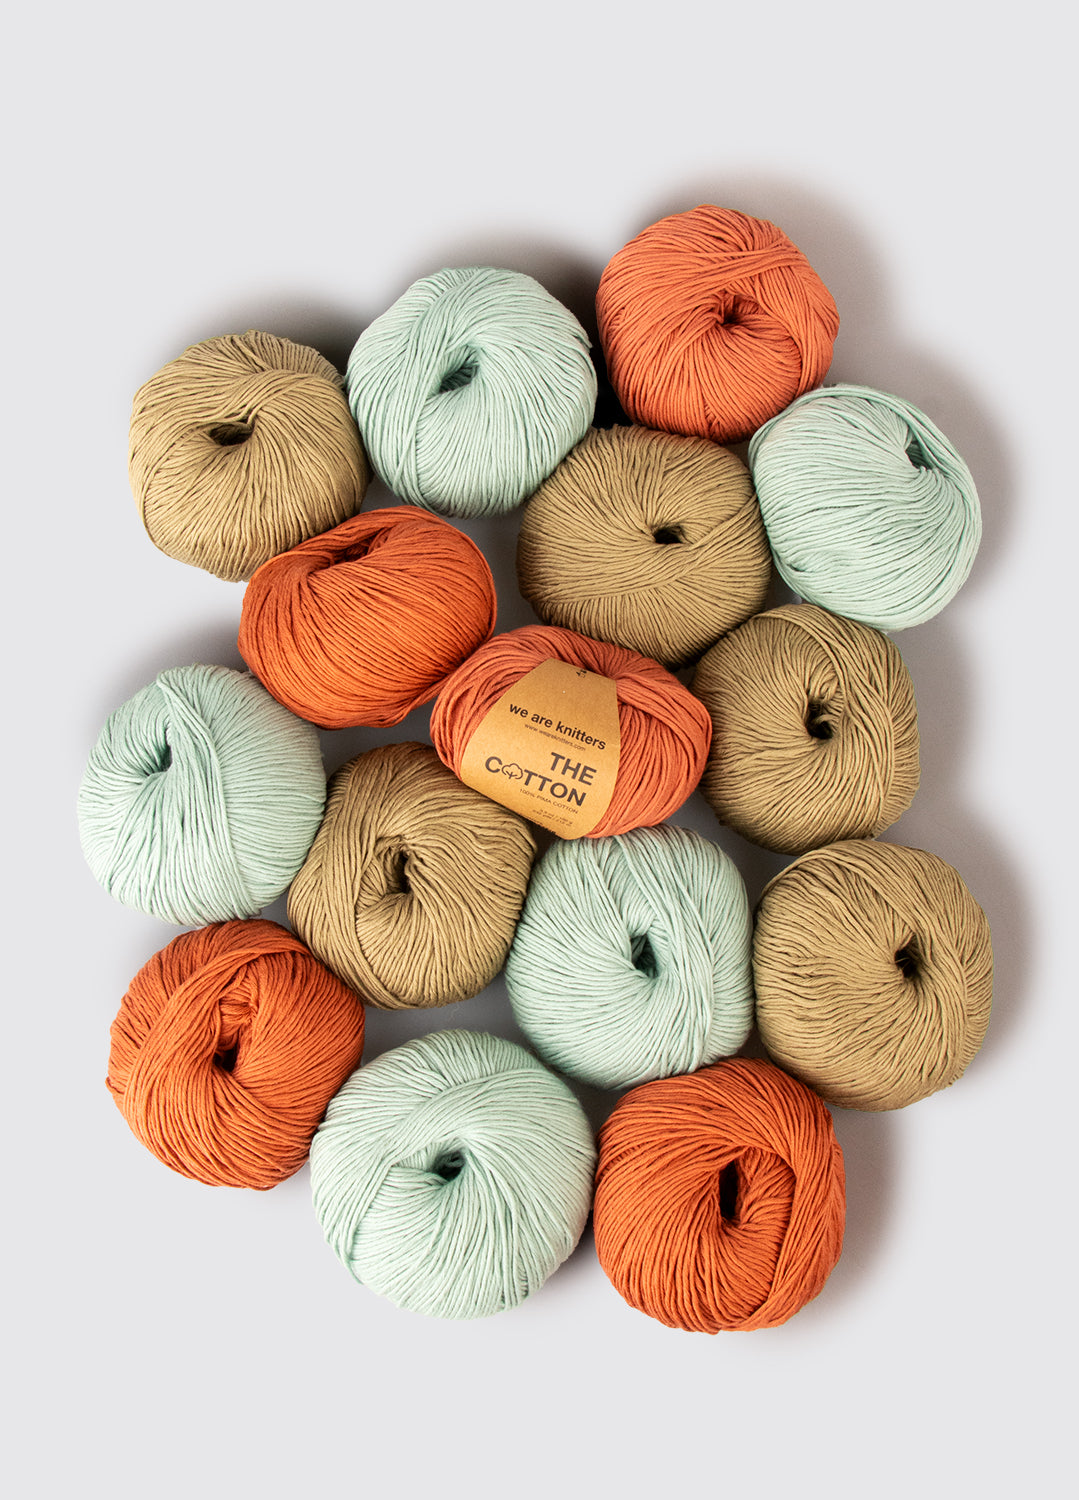 15 Pack of Pima Cotton Yarn Balls